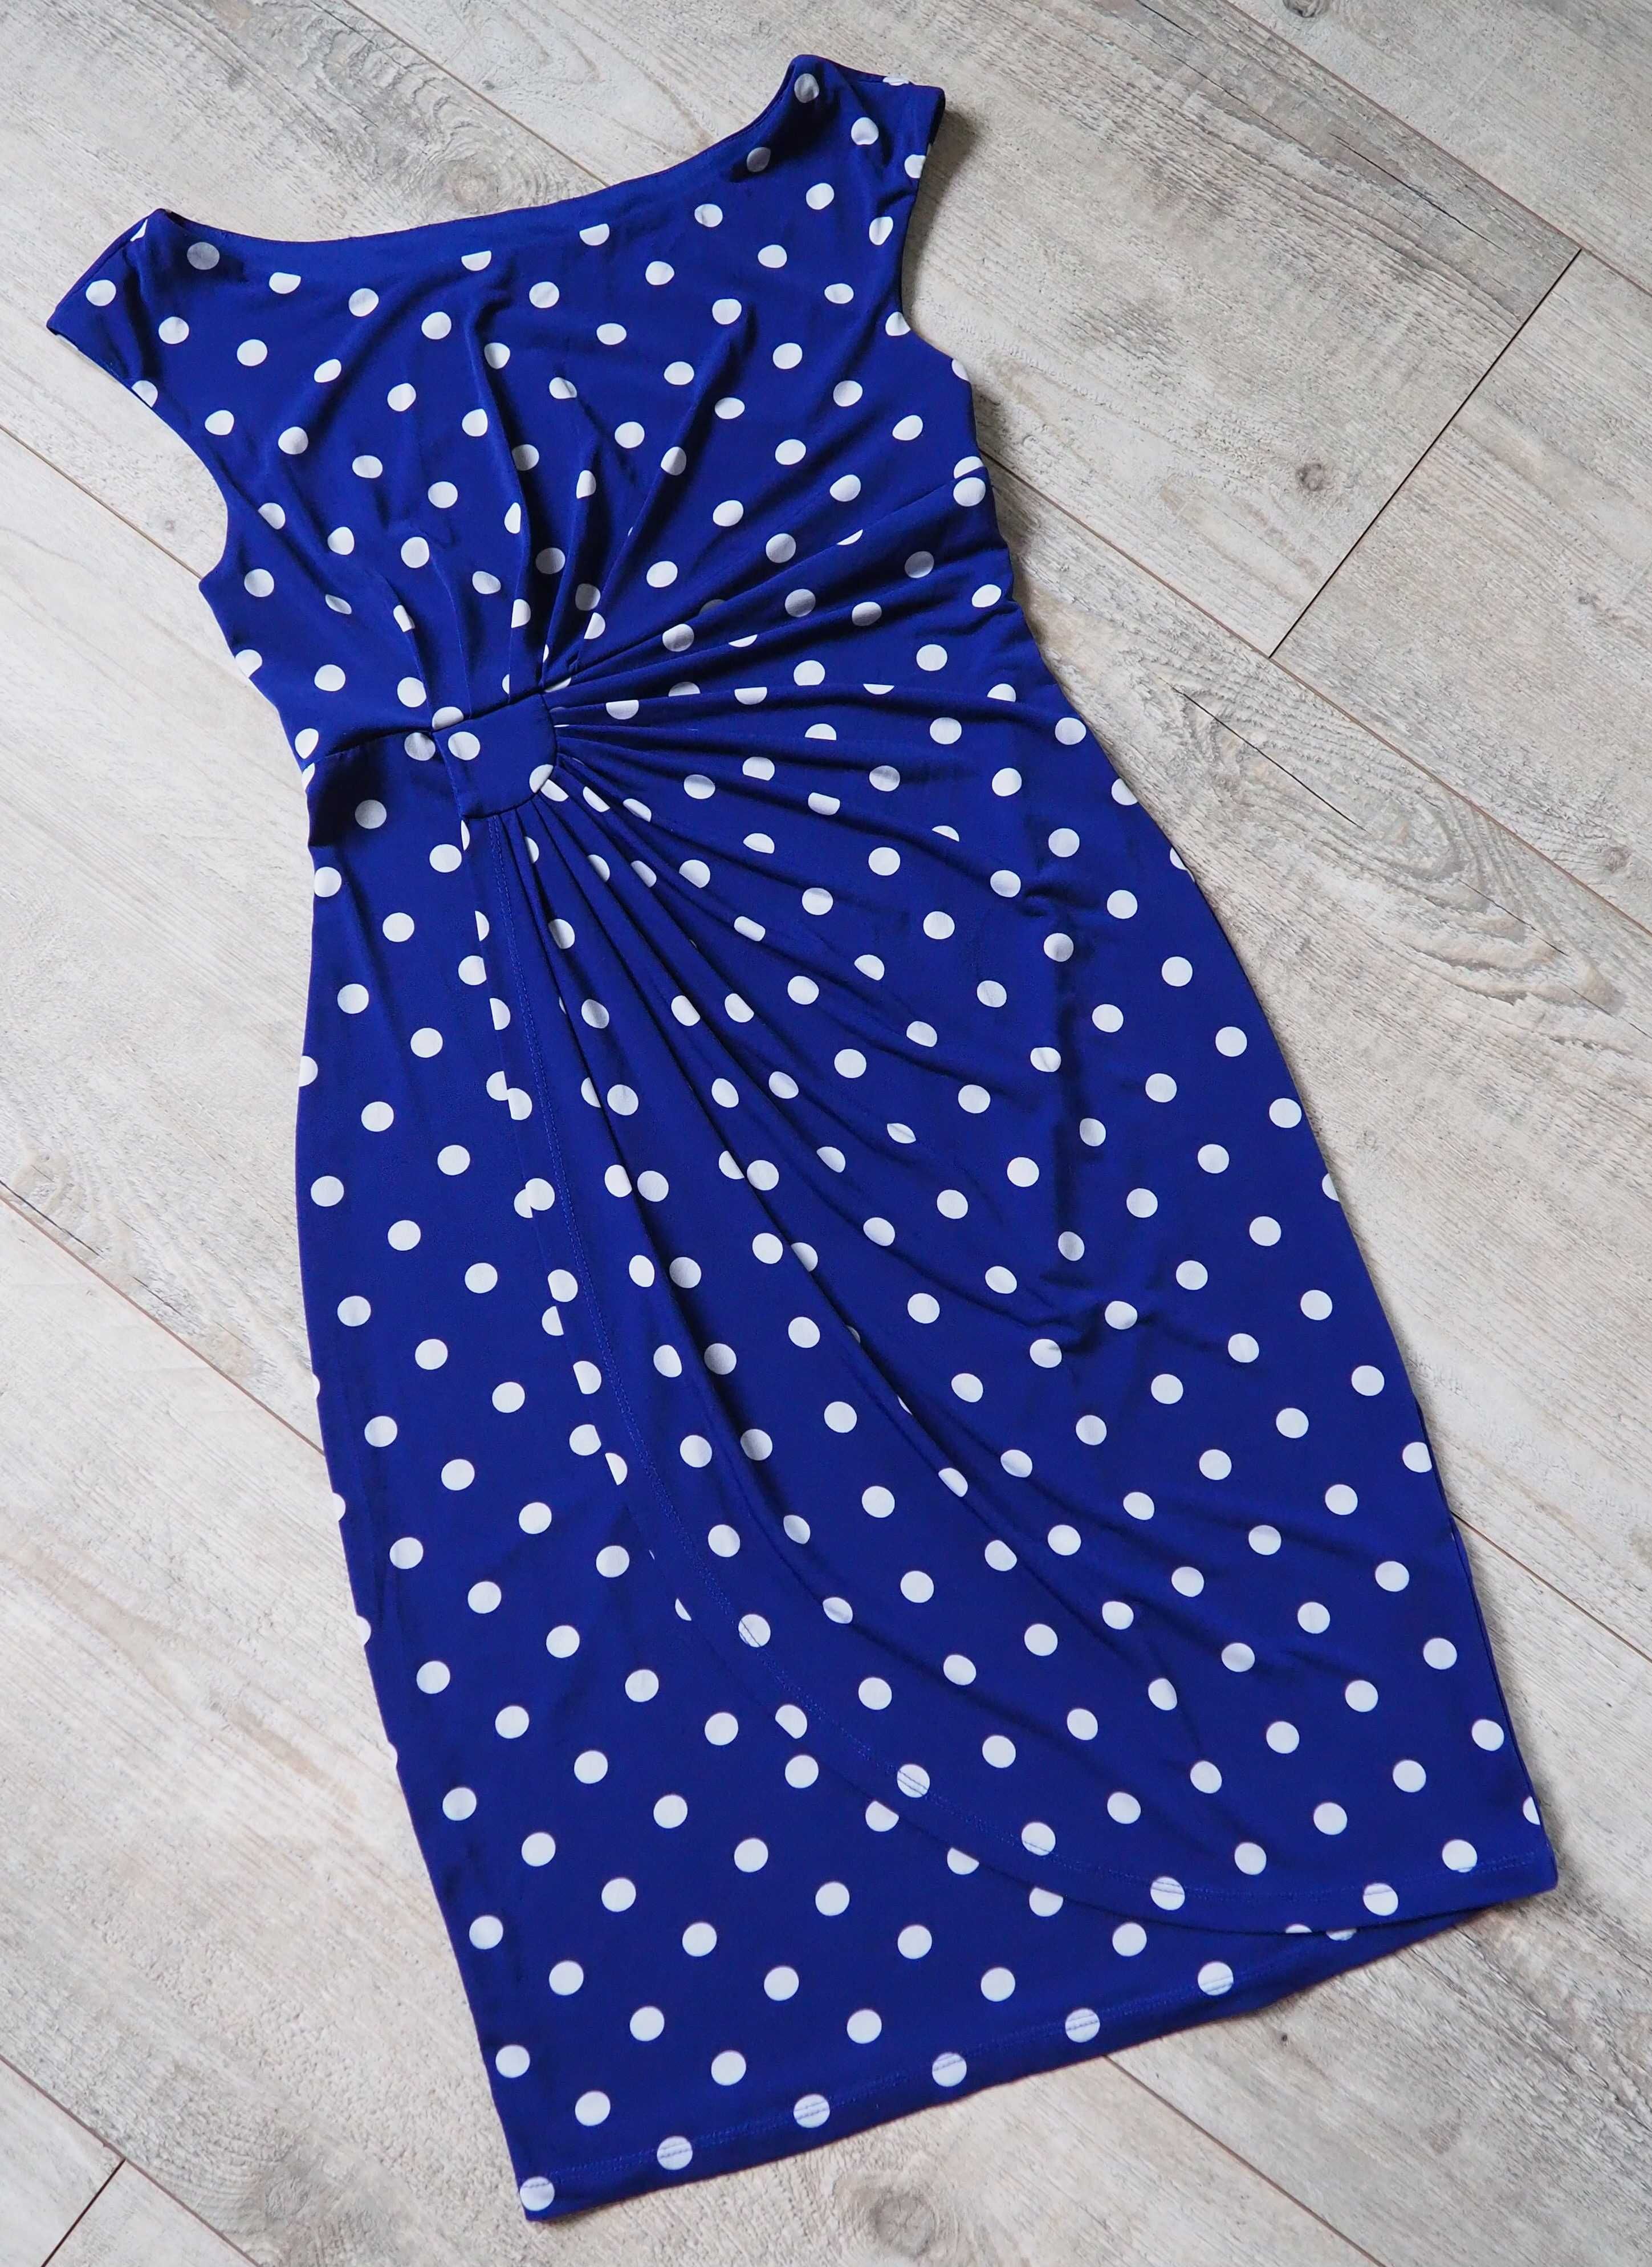 Connected Apparel_polka dot blue dress_rozmiar S/M